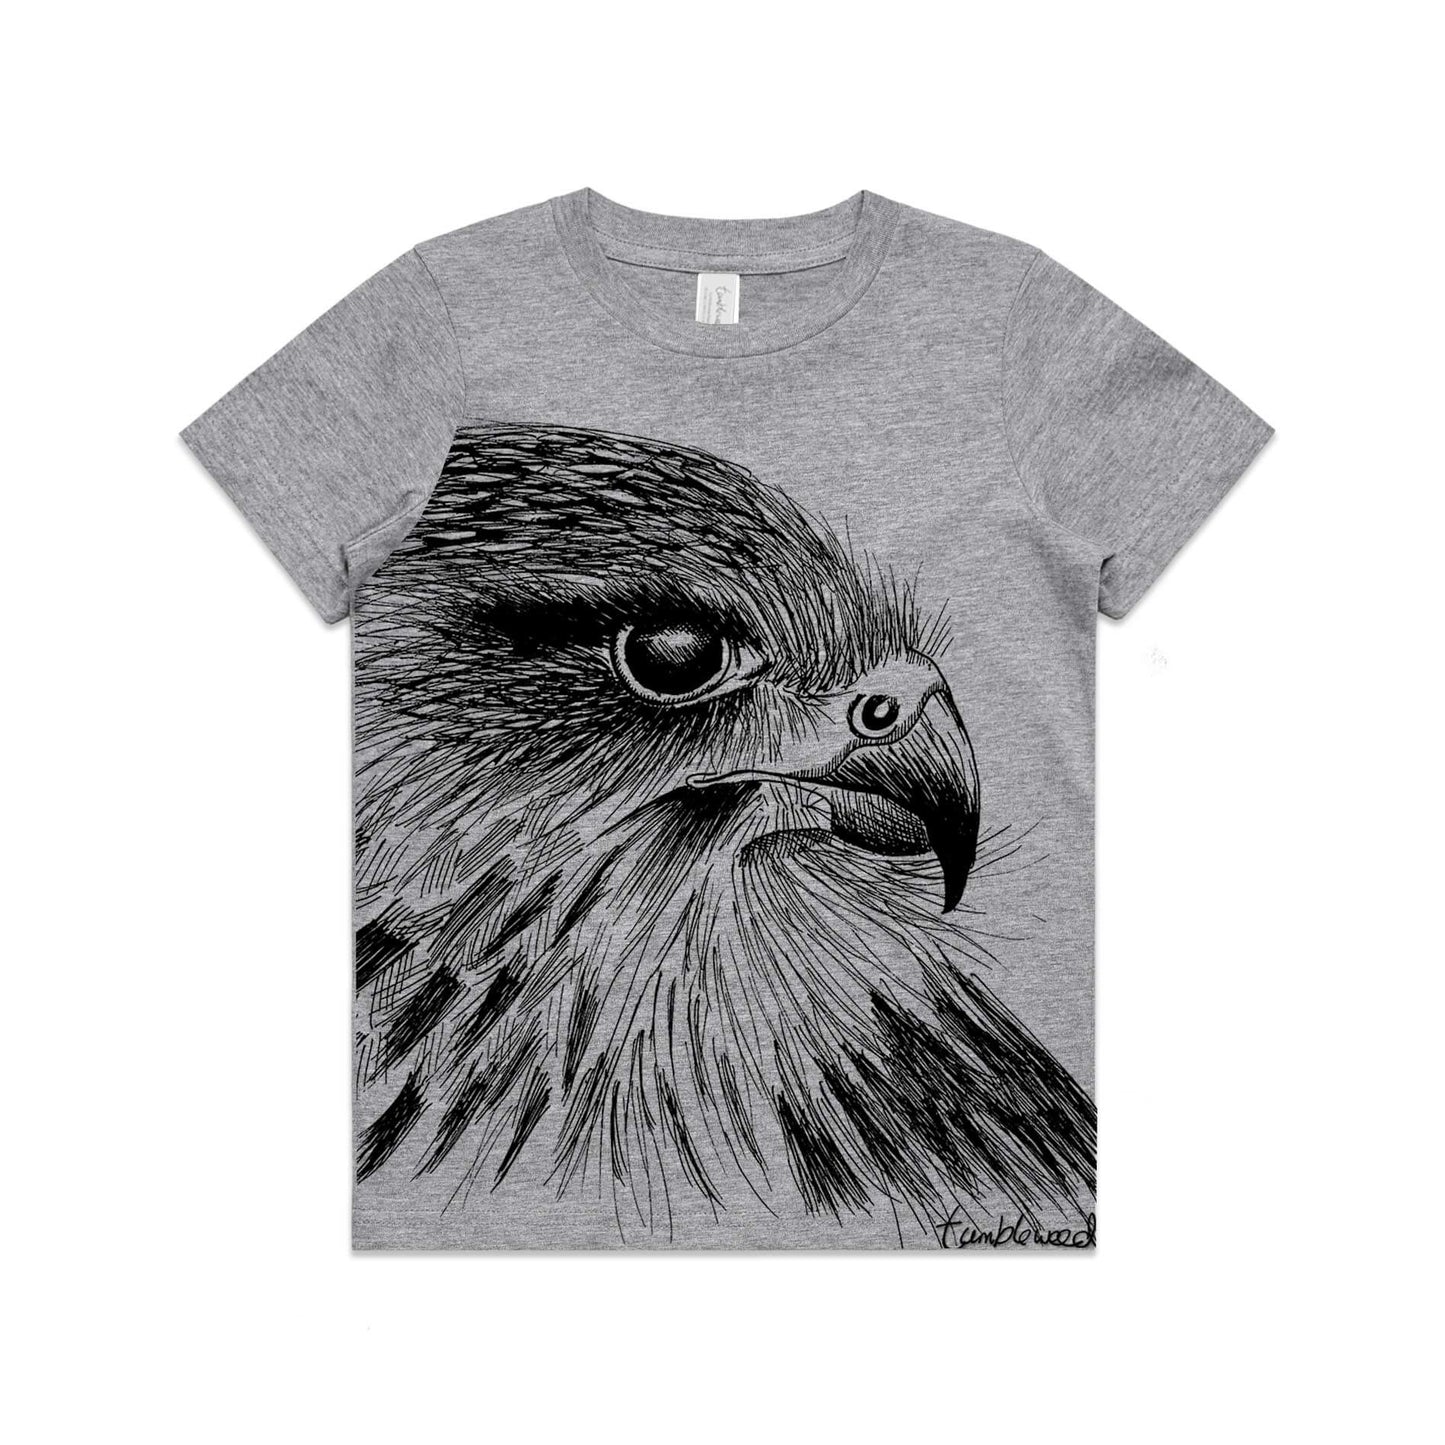 Grey marle, cotton kids' t-shirt with screen printed Kids Karearea/NZ Falcon design.